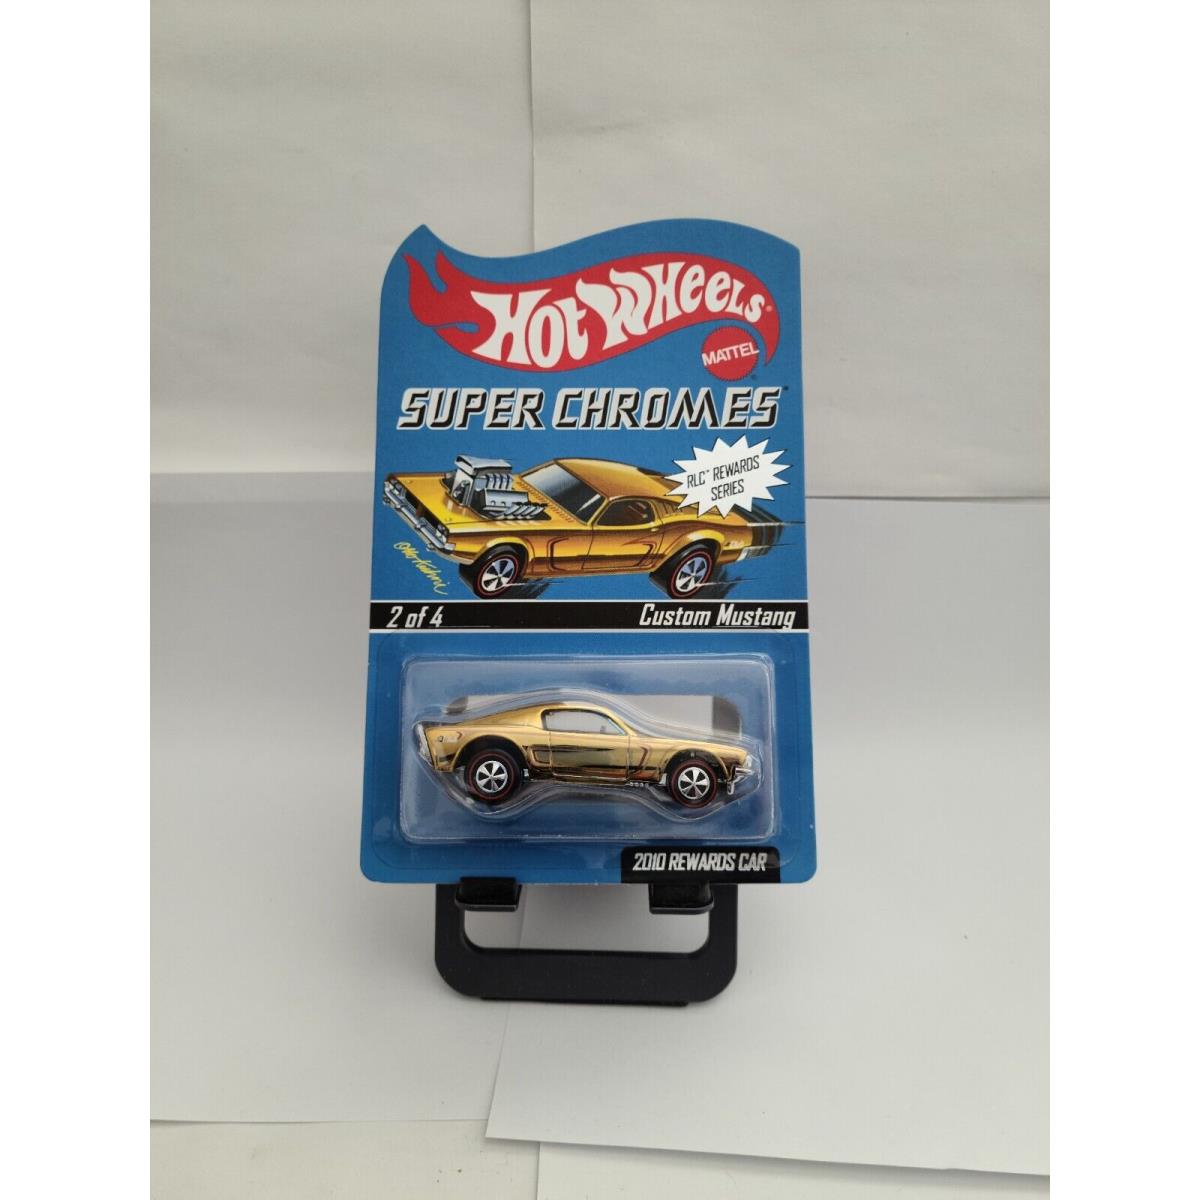 Hot Wheels Rlc Super Chromes Custom Mustang 2/4 2010 Rewards Car L76